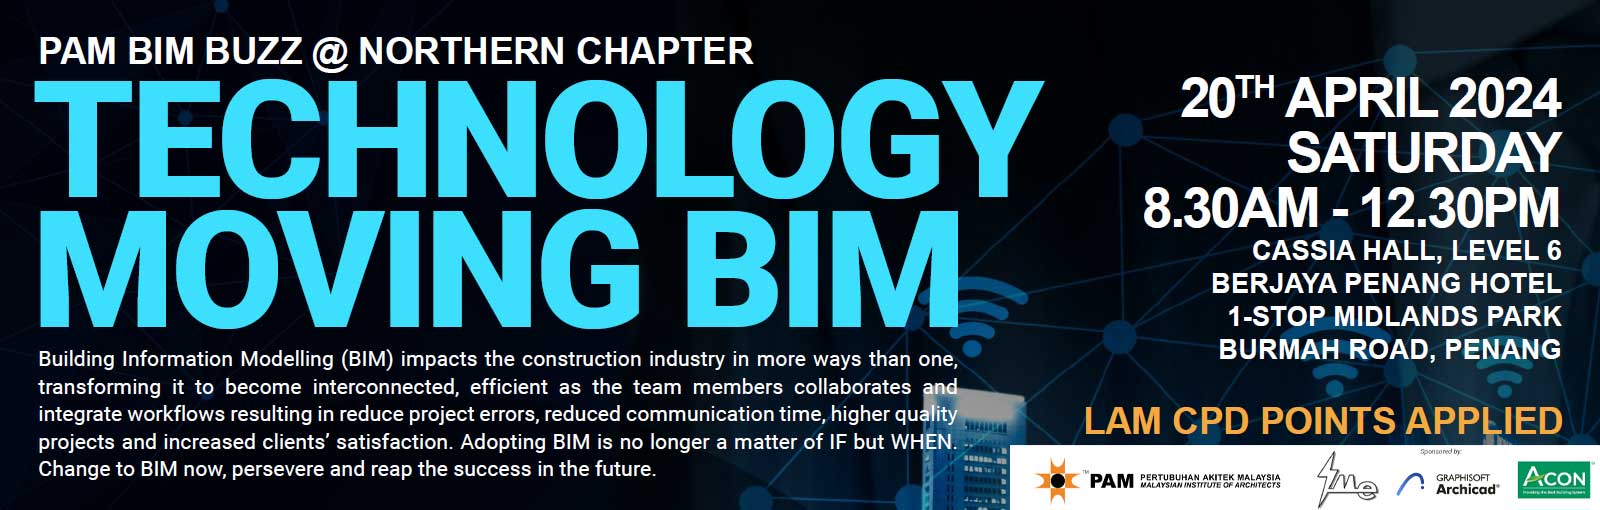 PAM BIM BUZZ@Northern - Technology Moving BIM